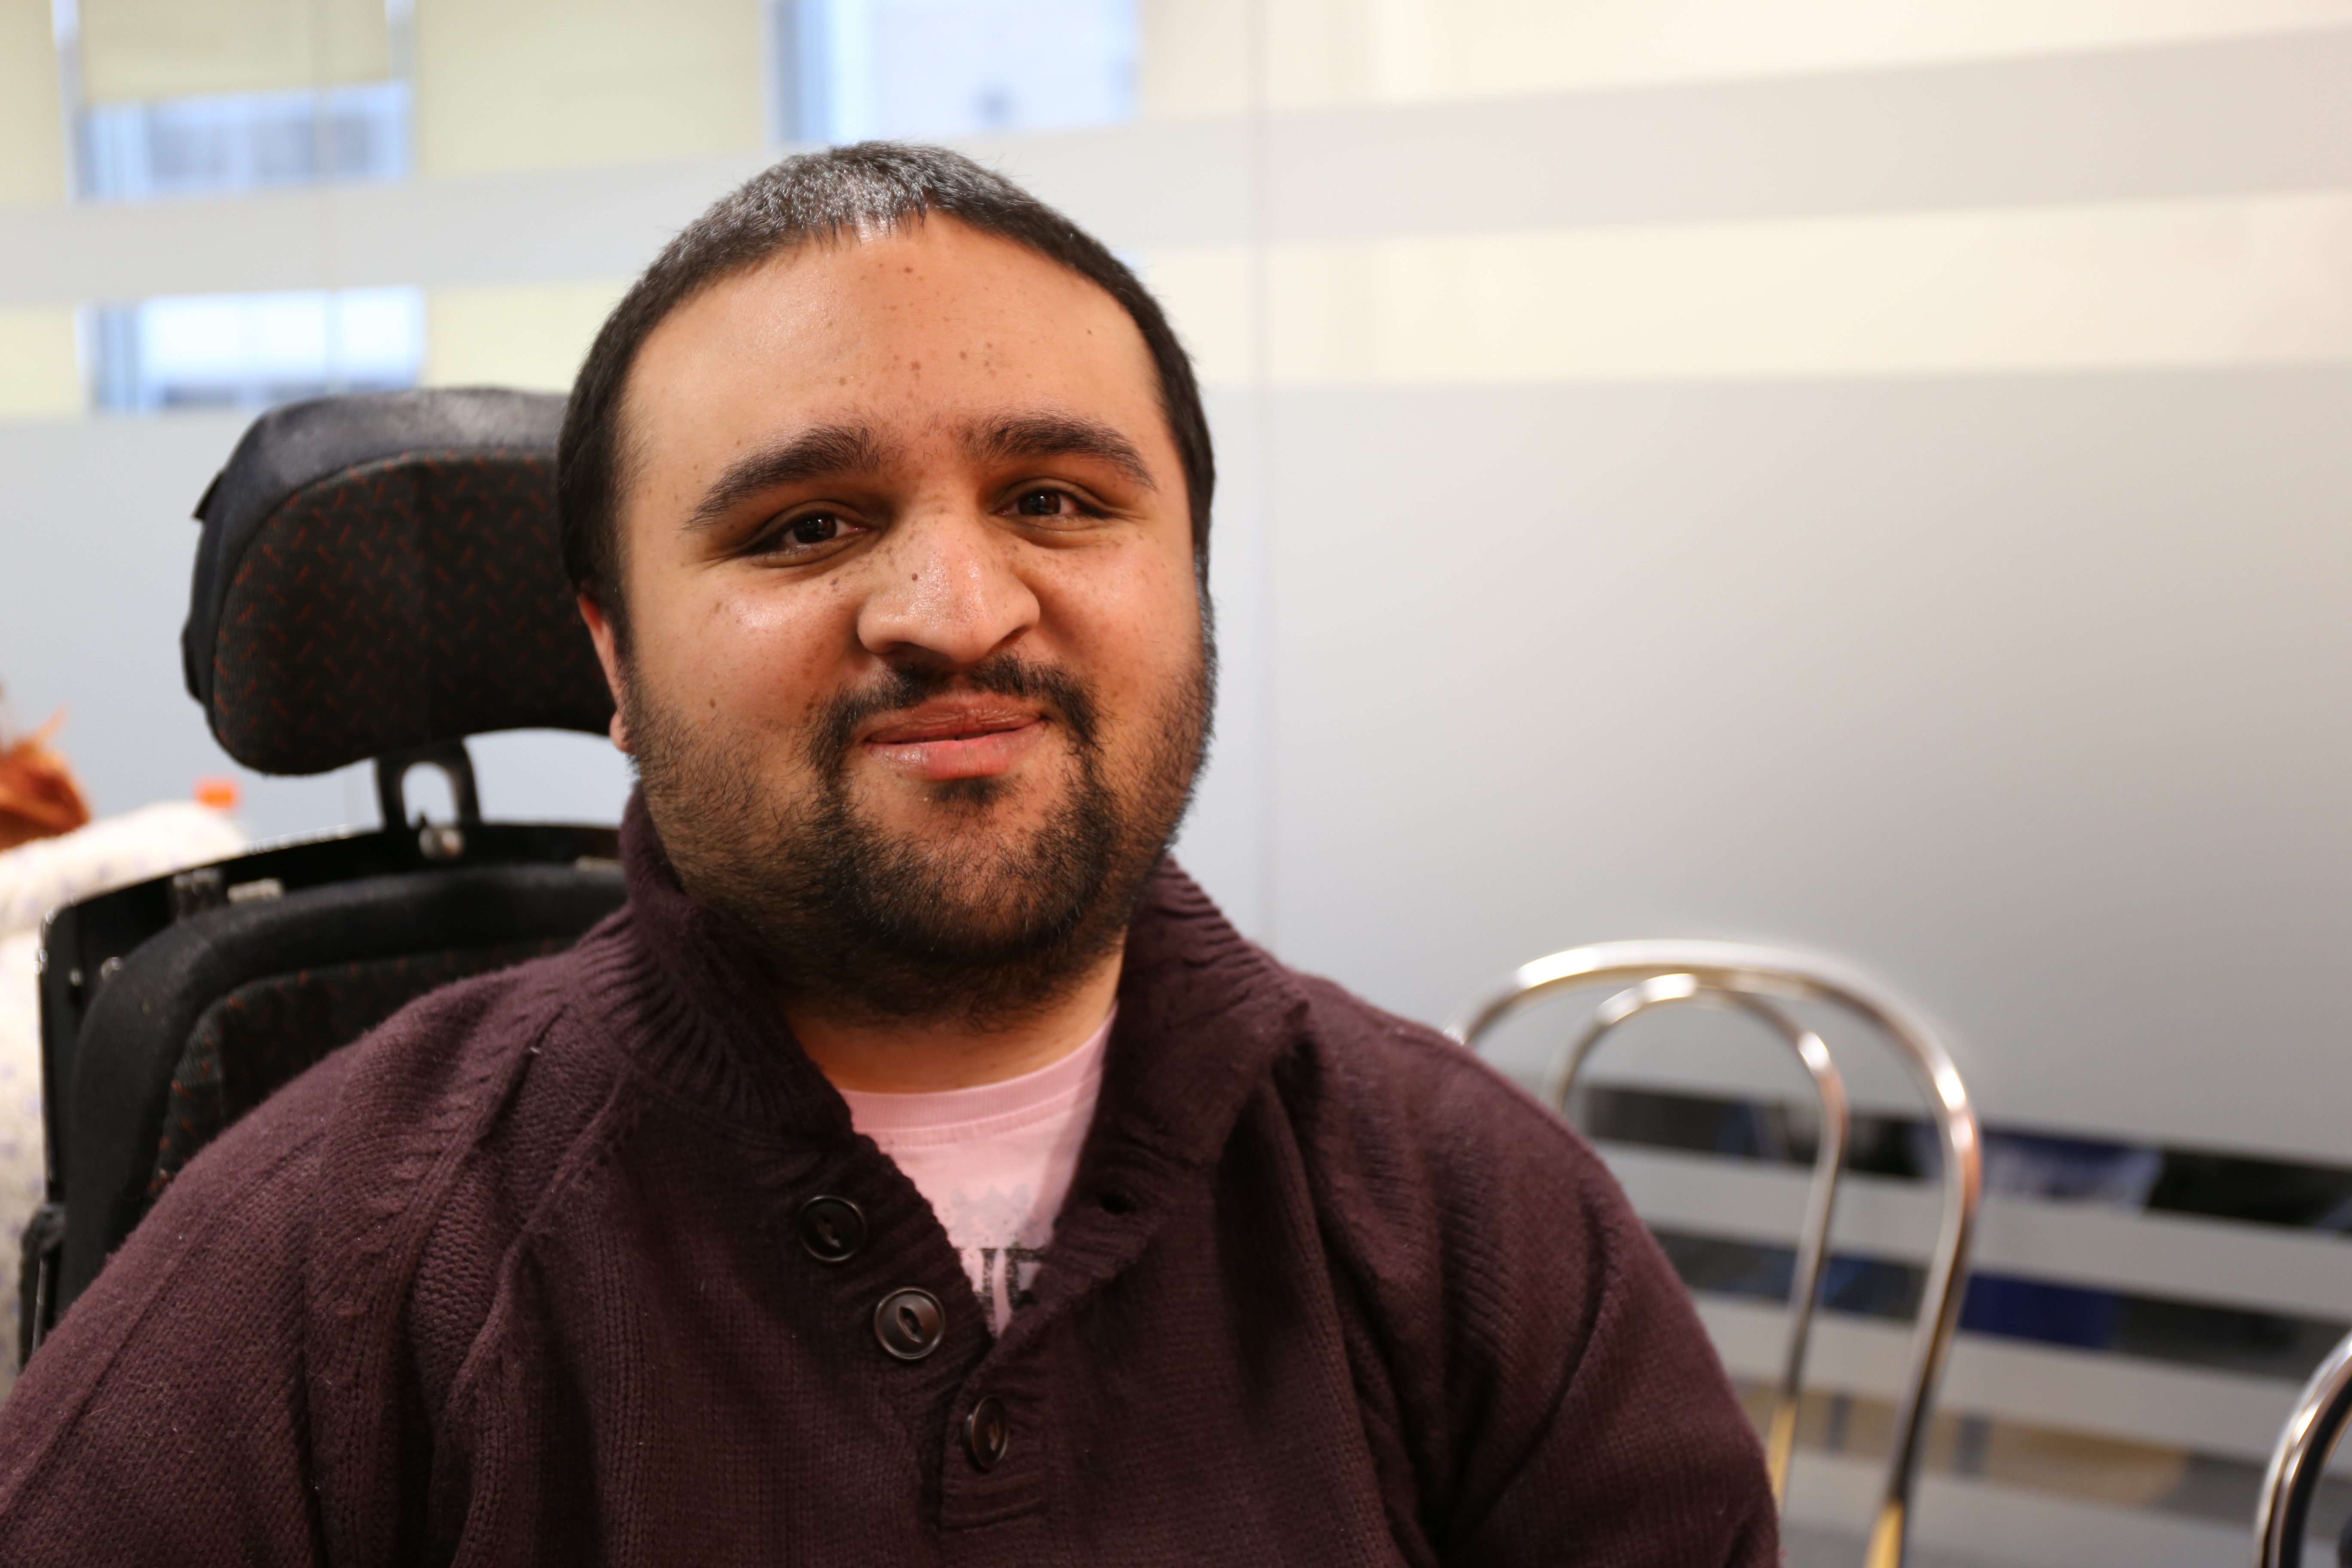 A man in a maroon shirt, with dark hair and a beard. He is a wheelchair user.